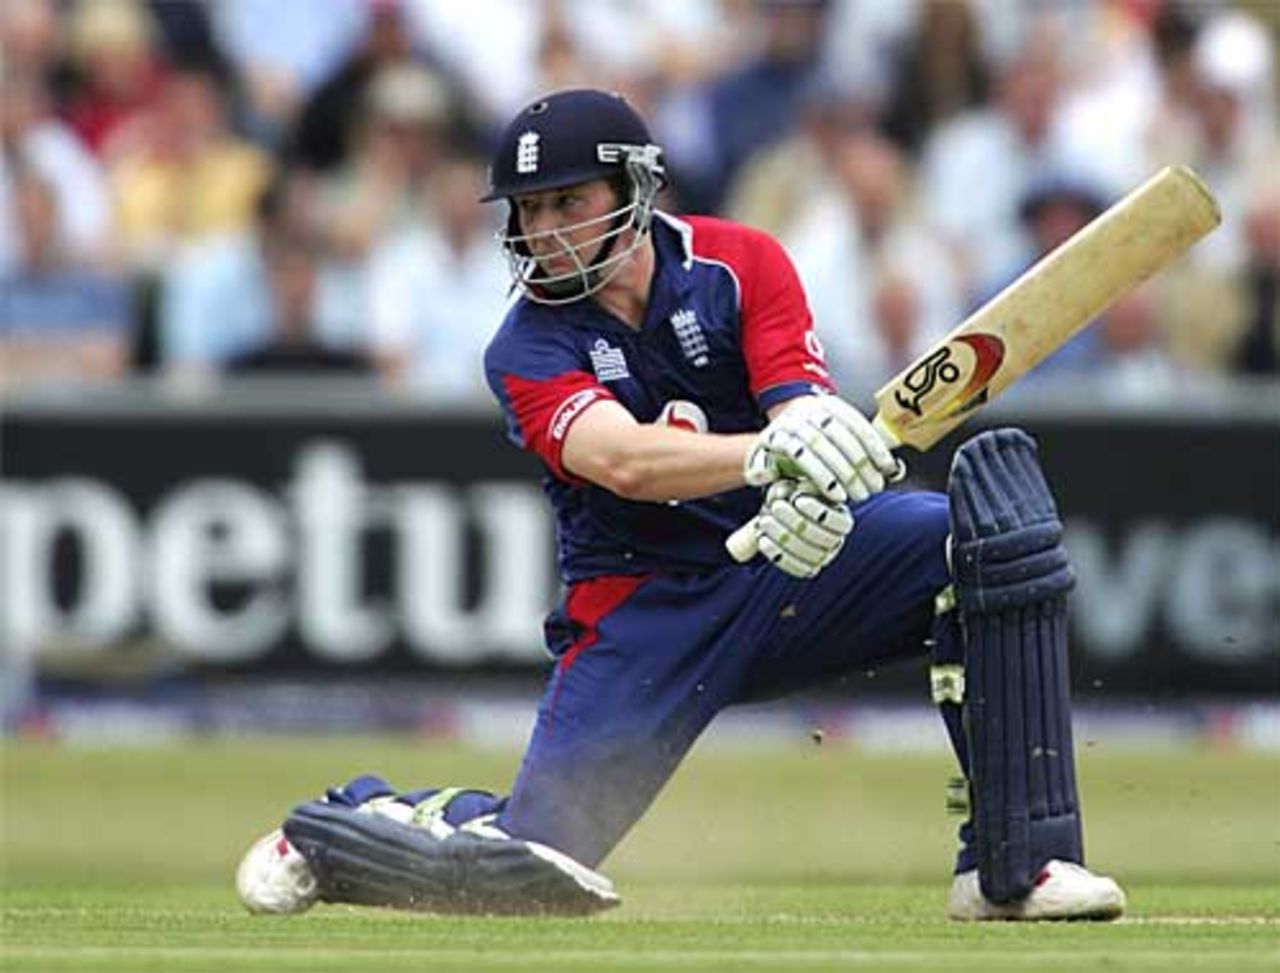 Jamie Dalrymple blasted 35 from 32 balls, England v Sri Lanka, Chester-le-Street, June 24, 2006